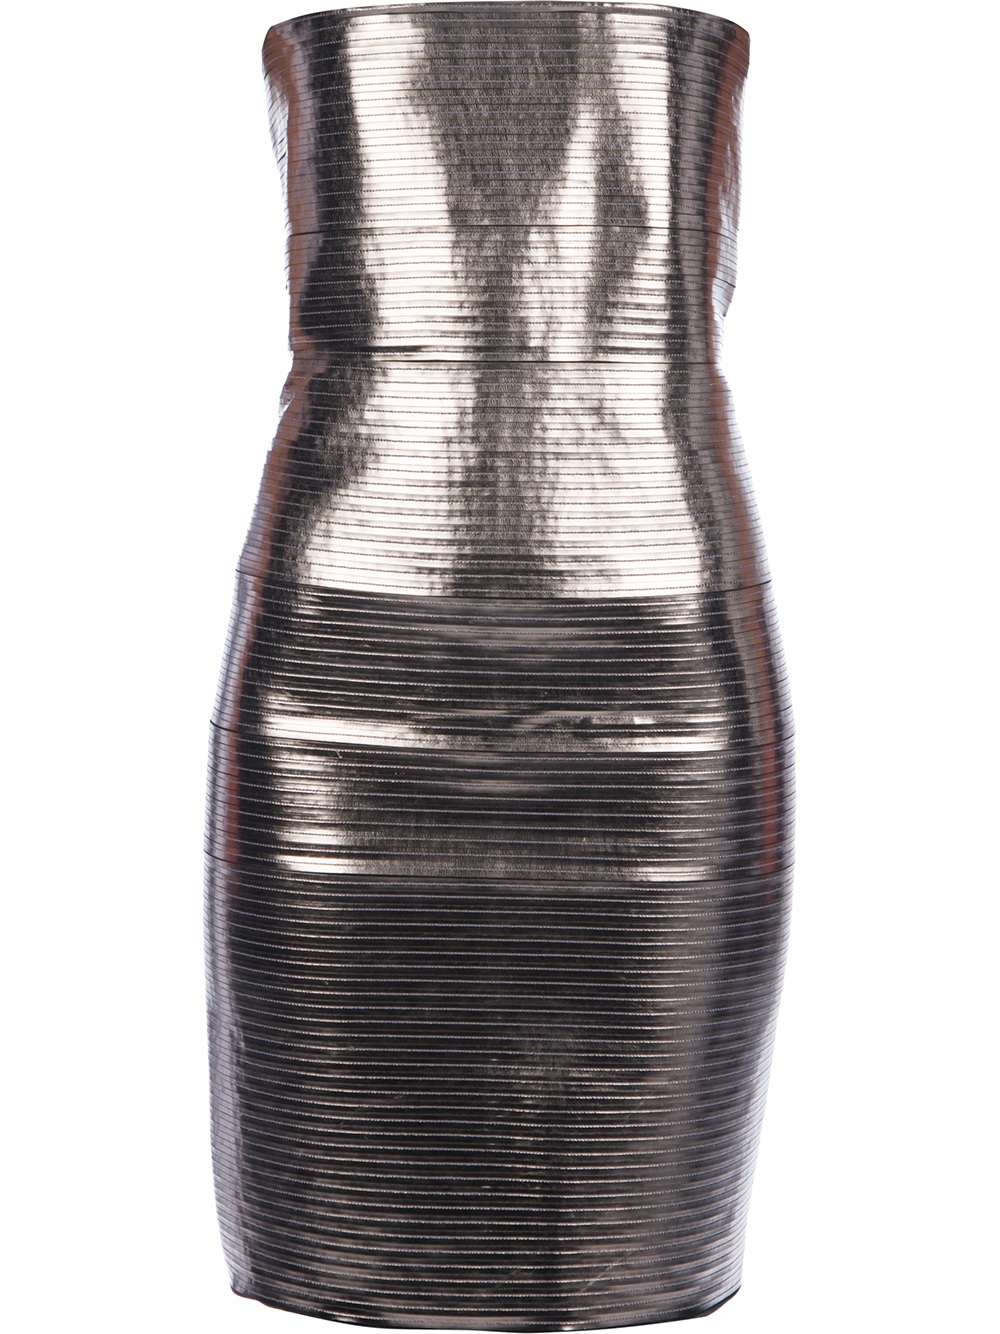 DSquared² Metallic Tube Dress in Metallic - Lyst